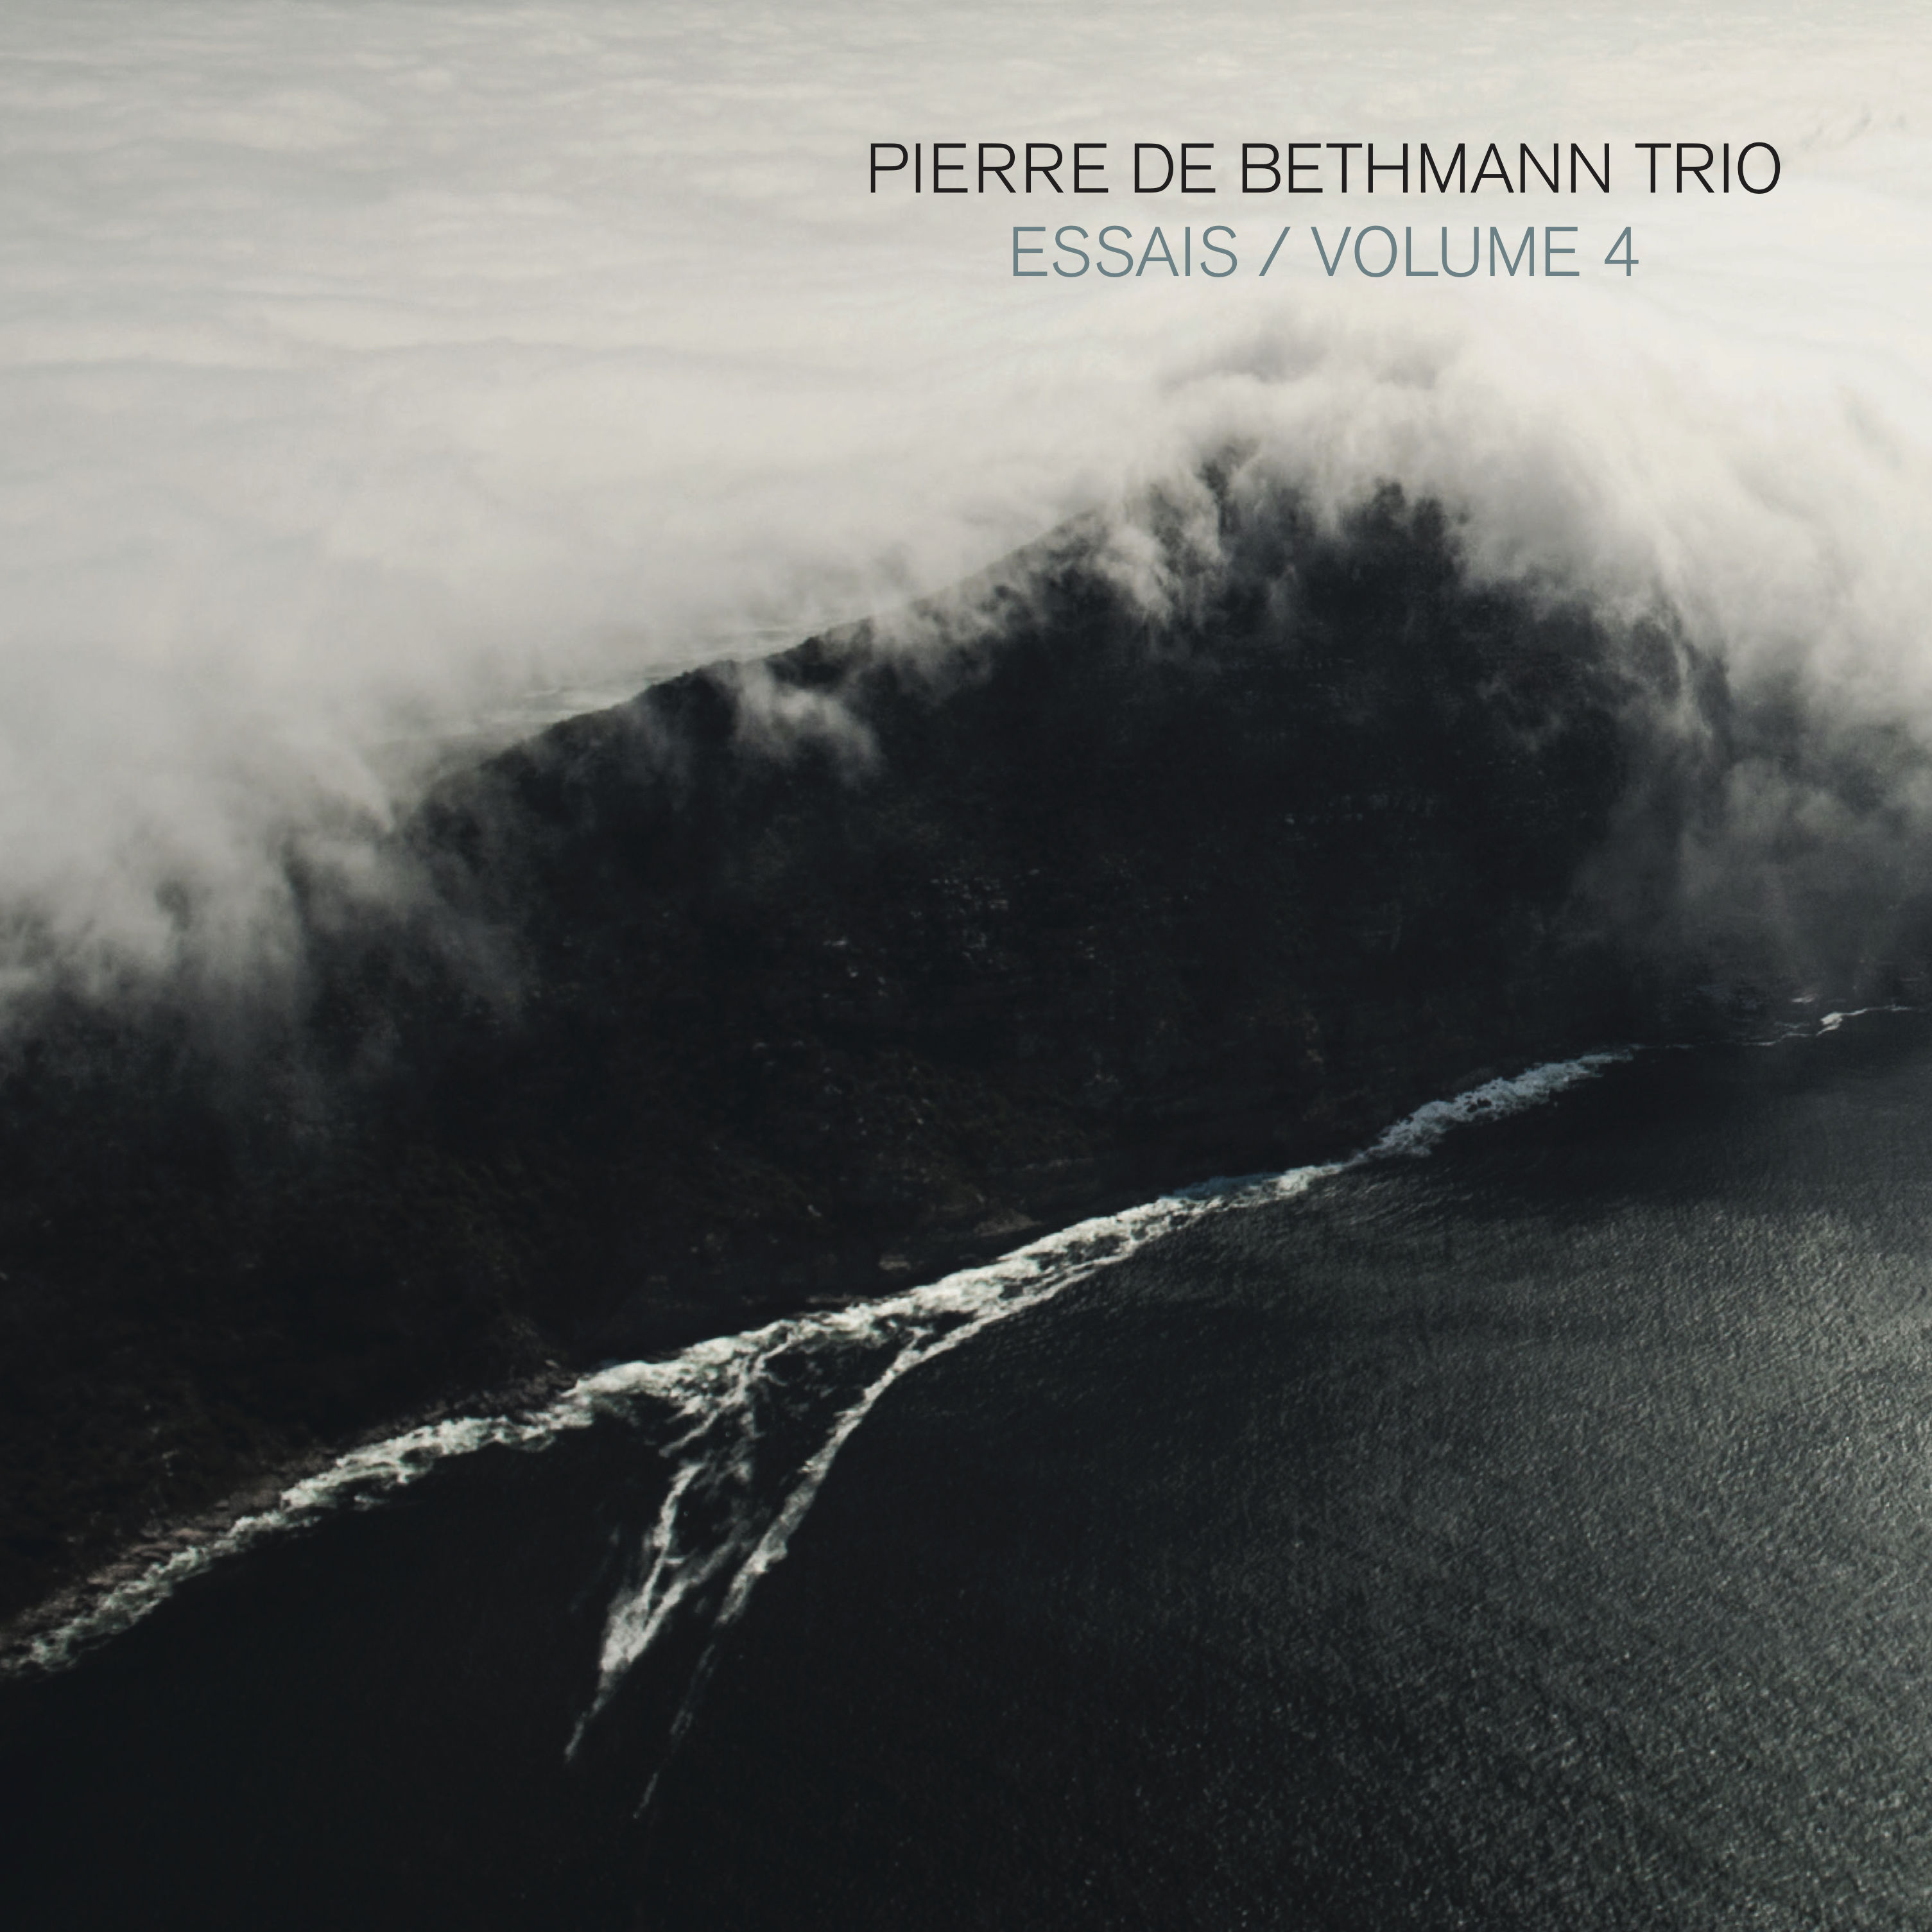 Pierre de Bethmann Trio – Essais, Volume 4 (2020) [FLAC 24bit/96kHz]